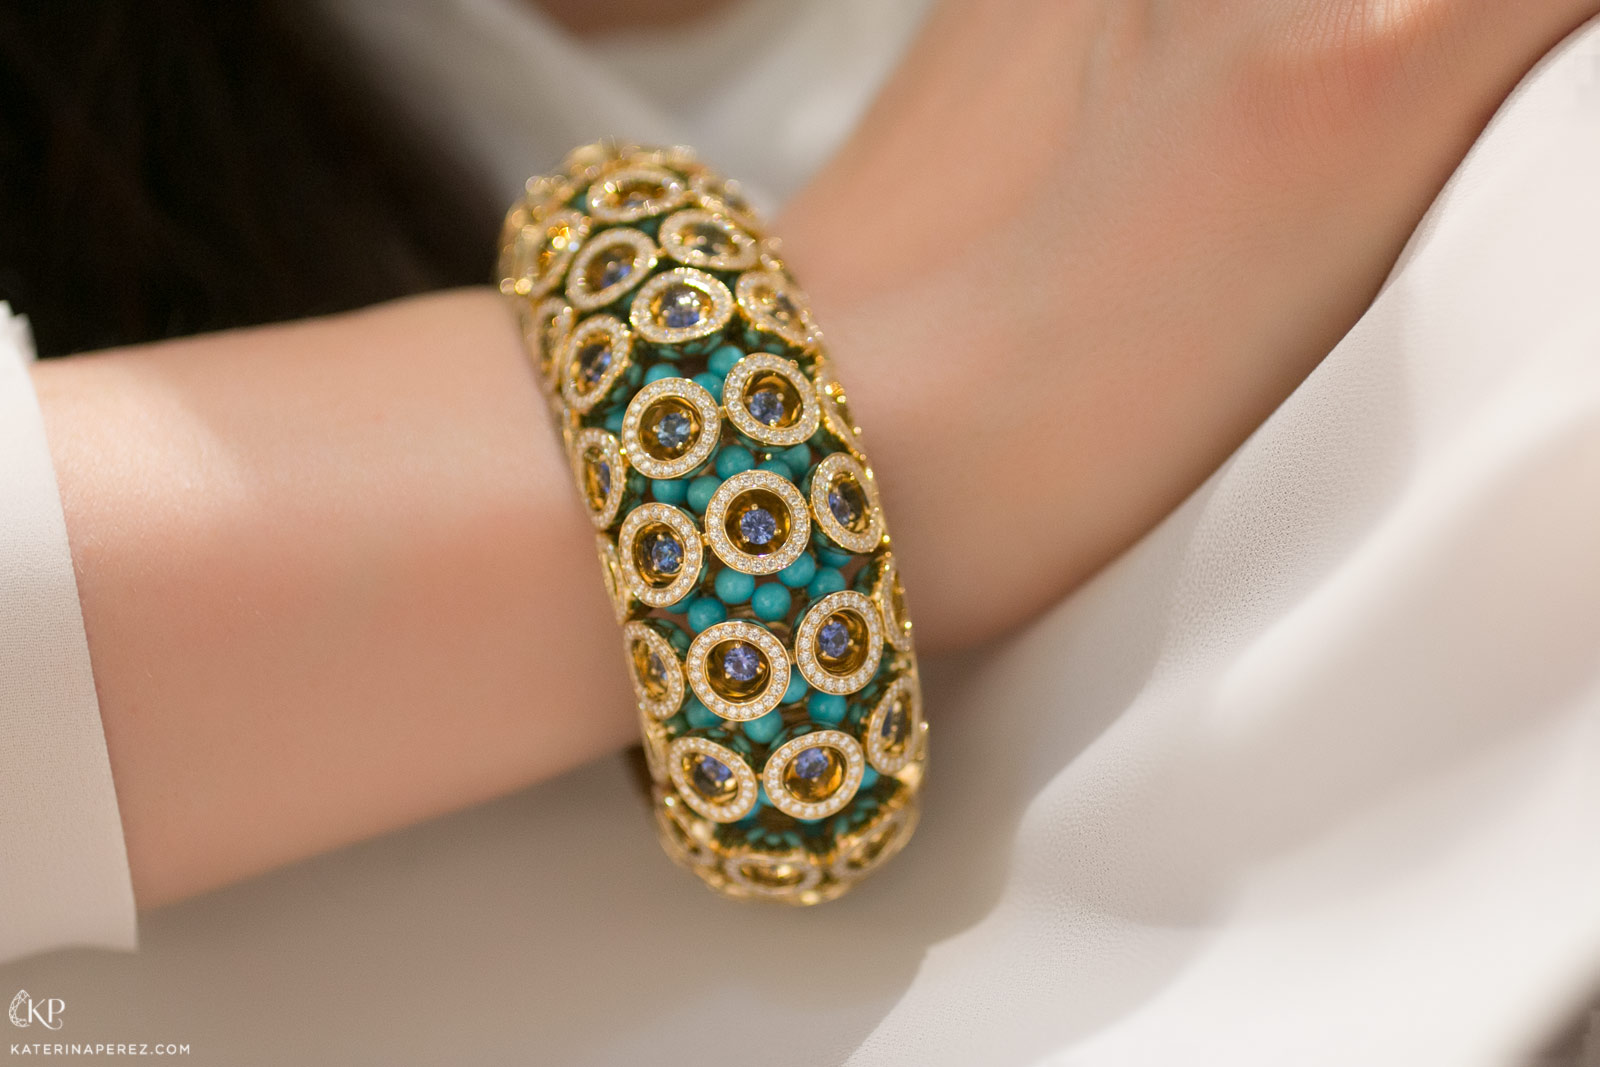 Van Cleef&Arpels Op'Art bracelet with turquoise beads, diamonds and sapphires